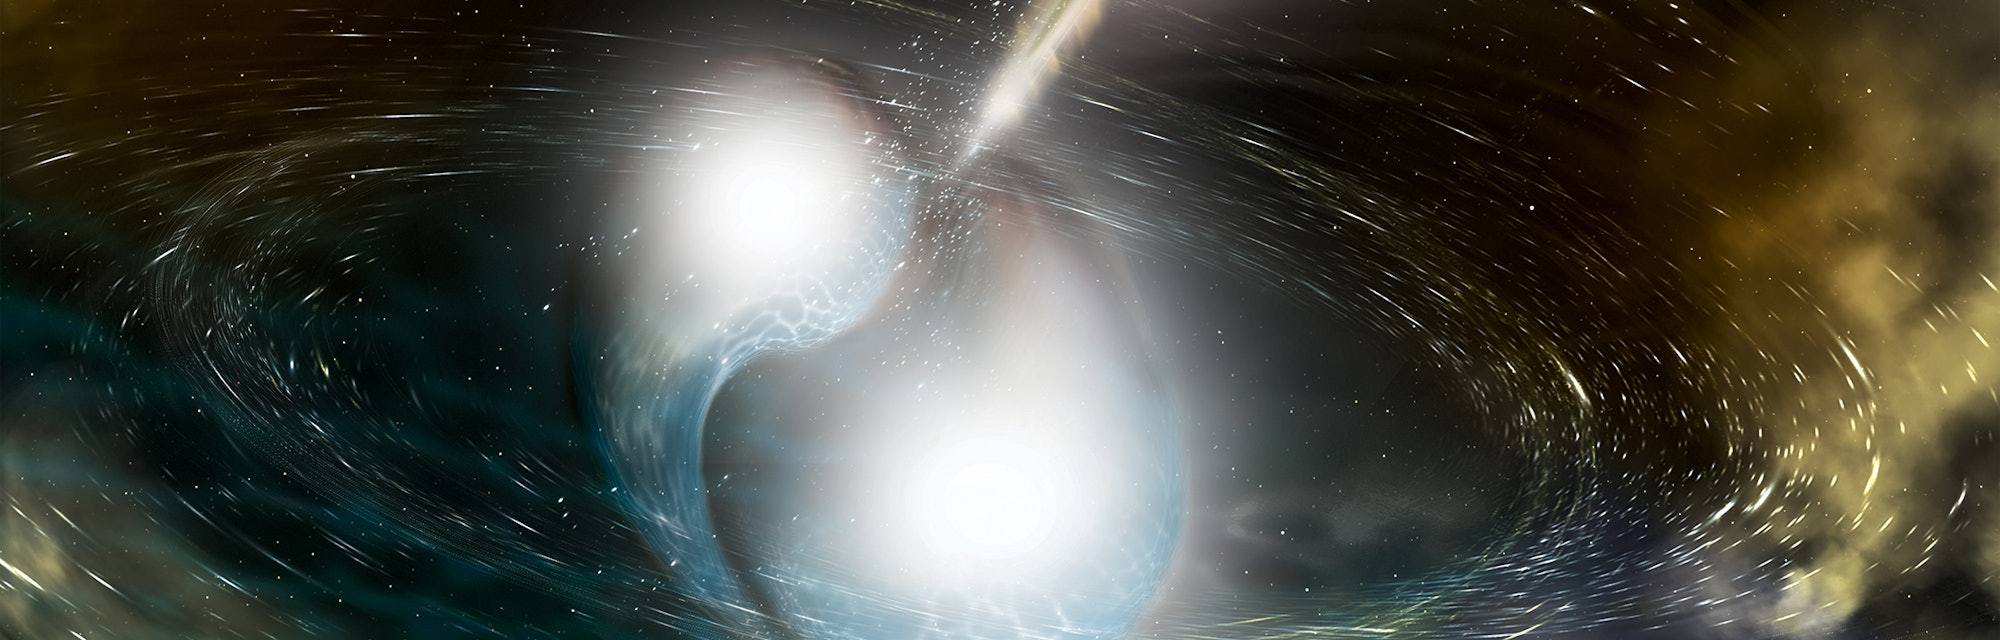 two neutron stars merging